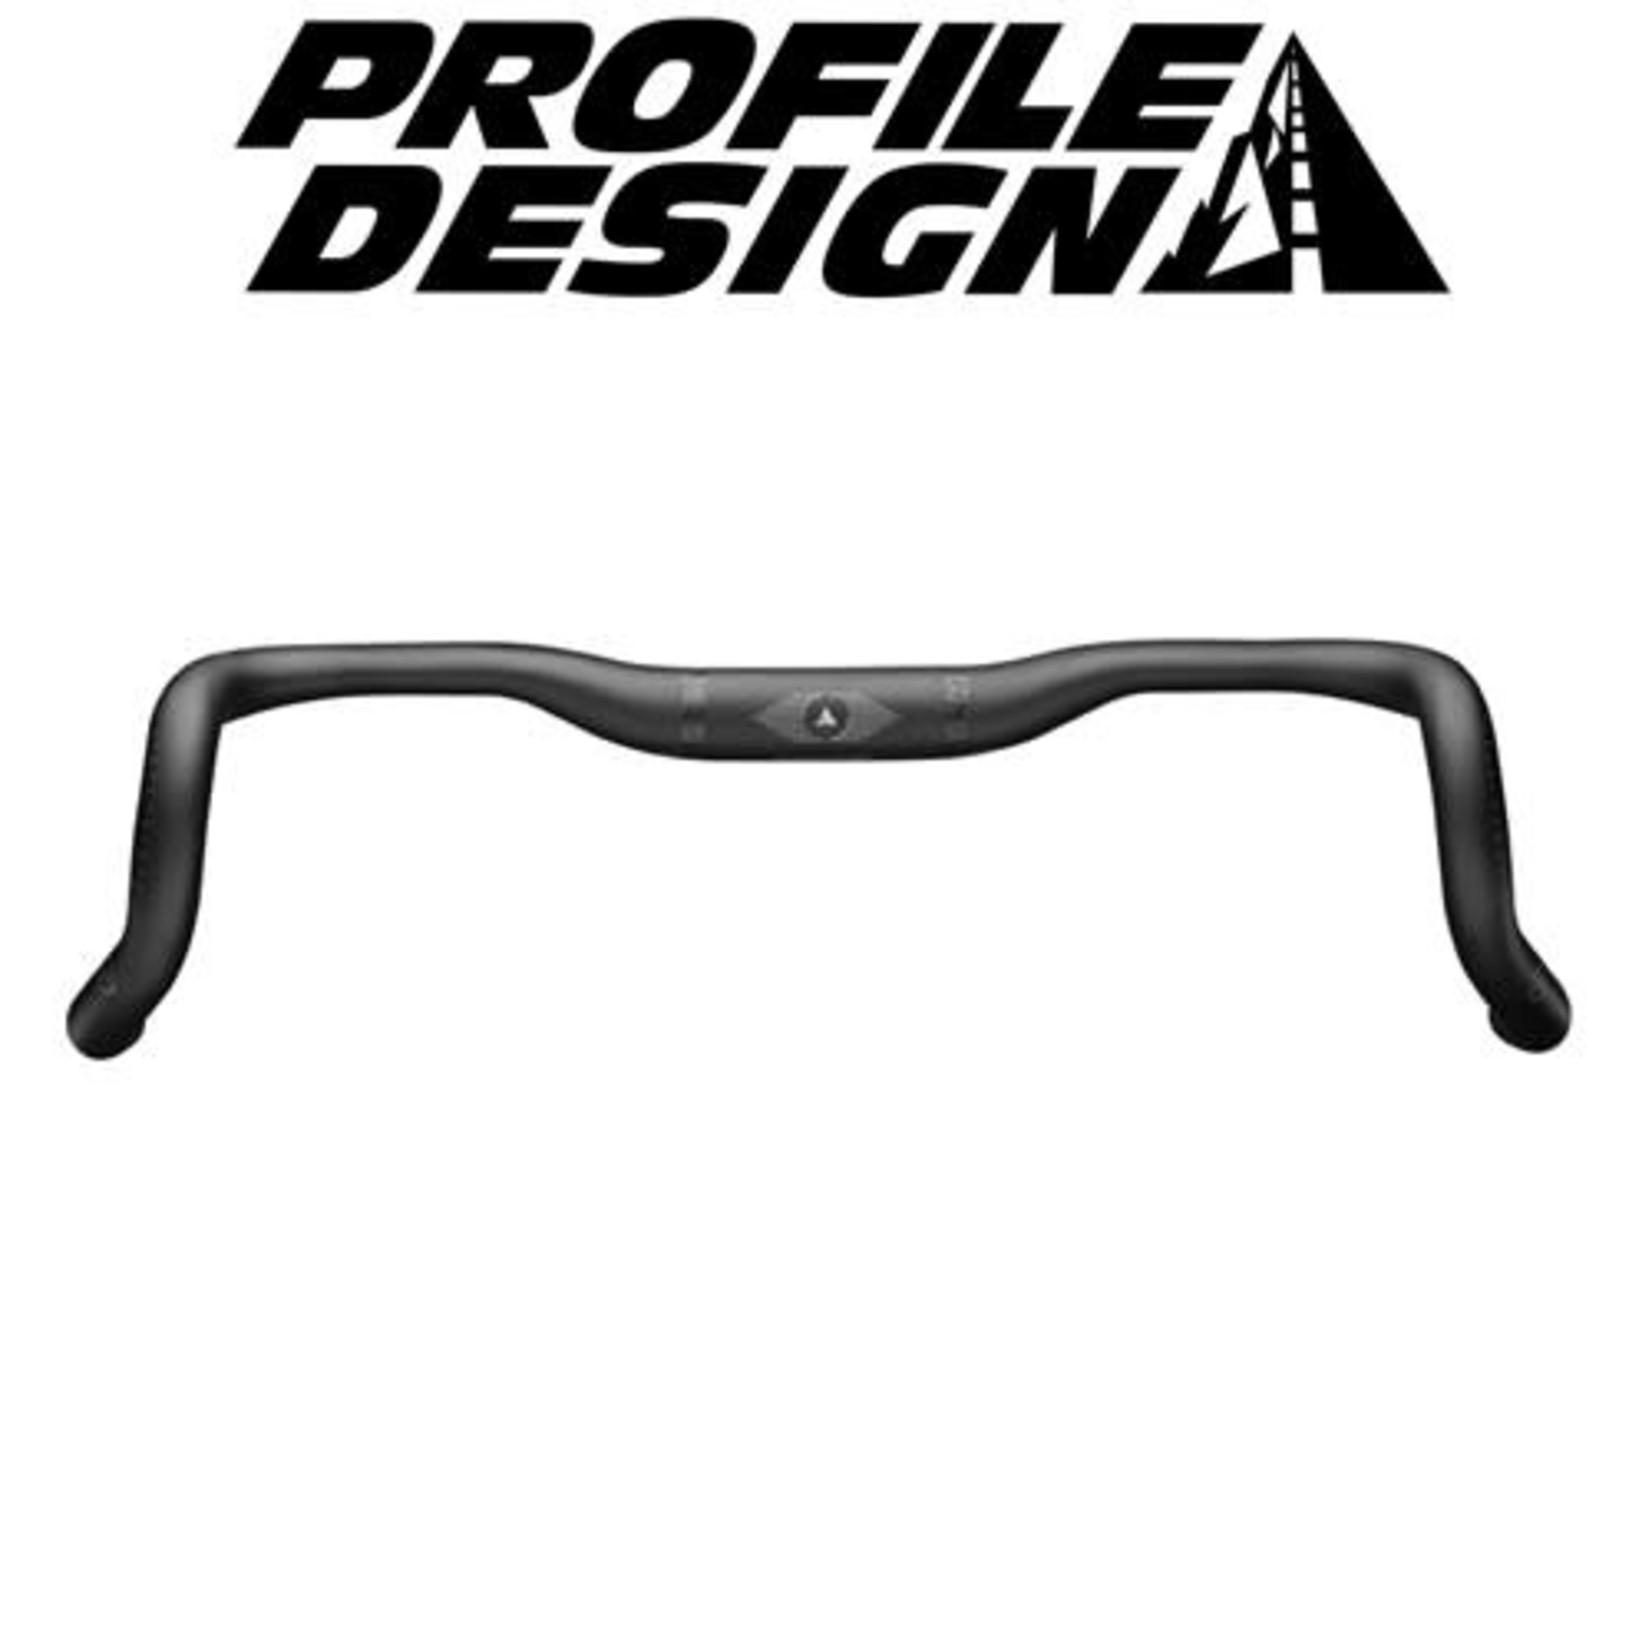 profile design Profile Design DRV/GMR Drop Bar 105 42cm - 6061-T6 Aluminium - Black